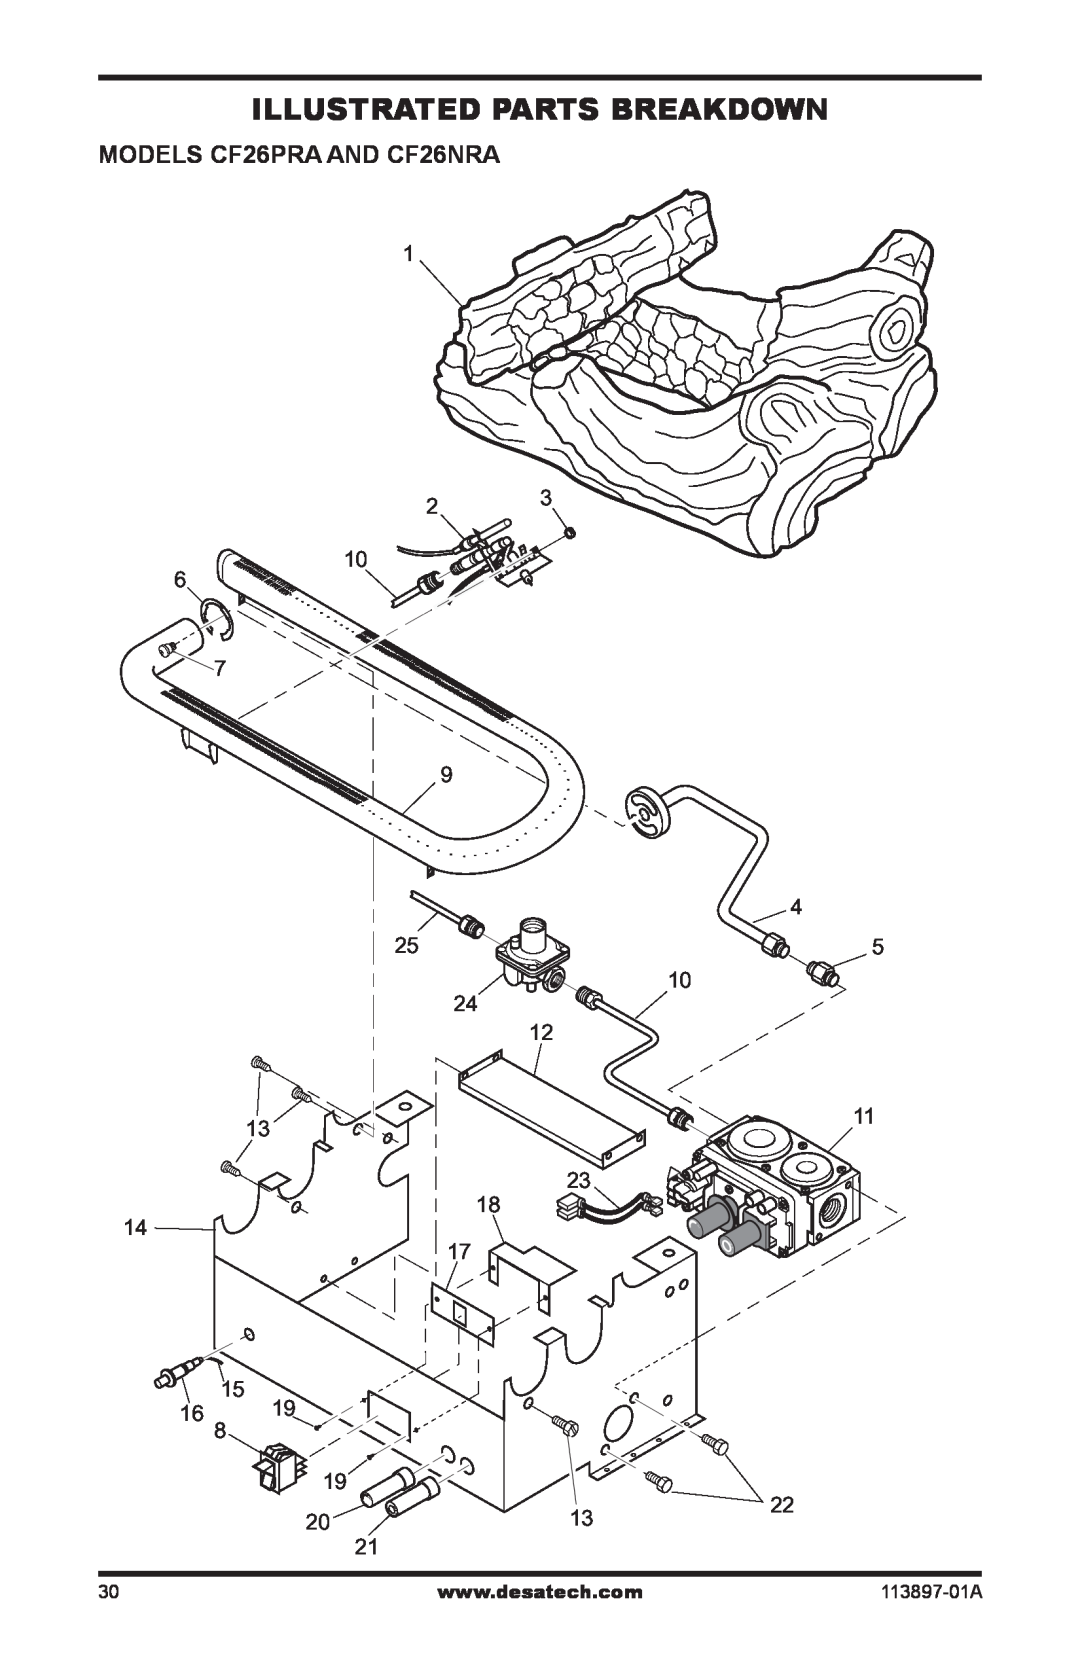 Desa installation manual Illustrated Parts Breakdown, MODELS CF26PRA AND CF26NRA 